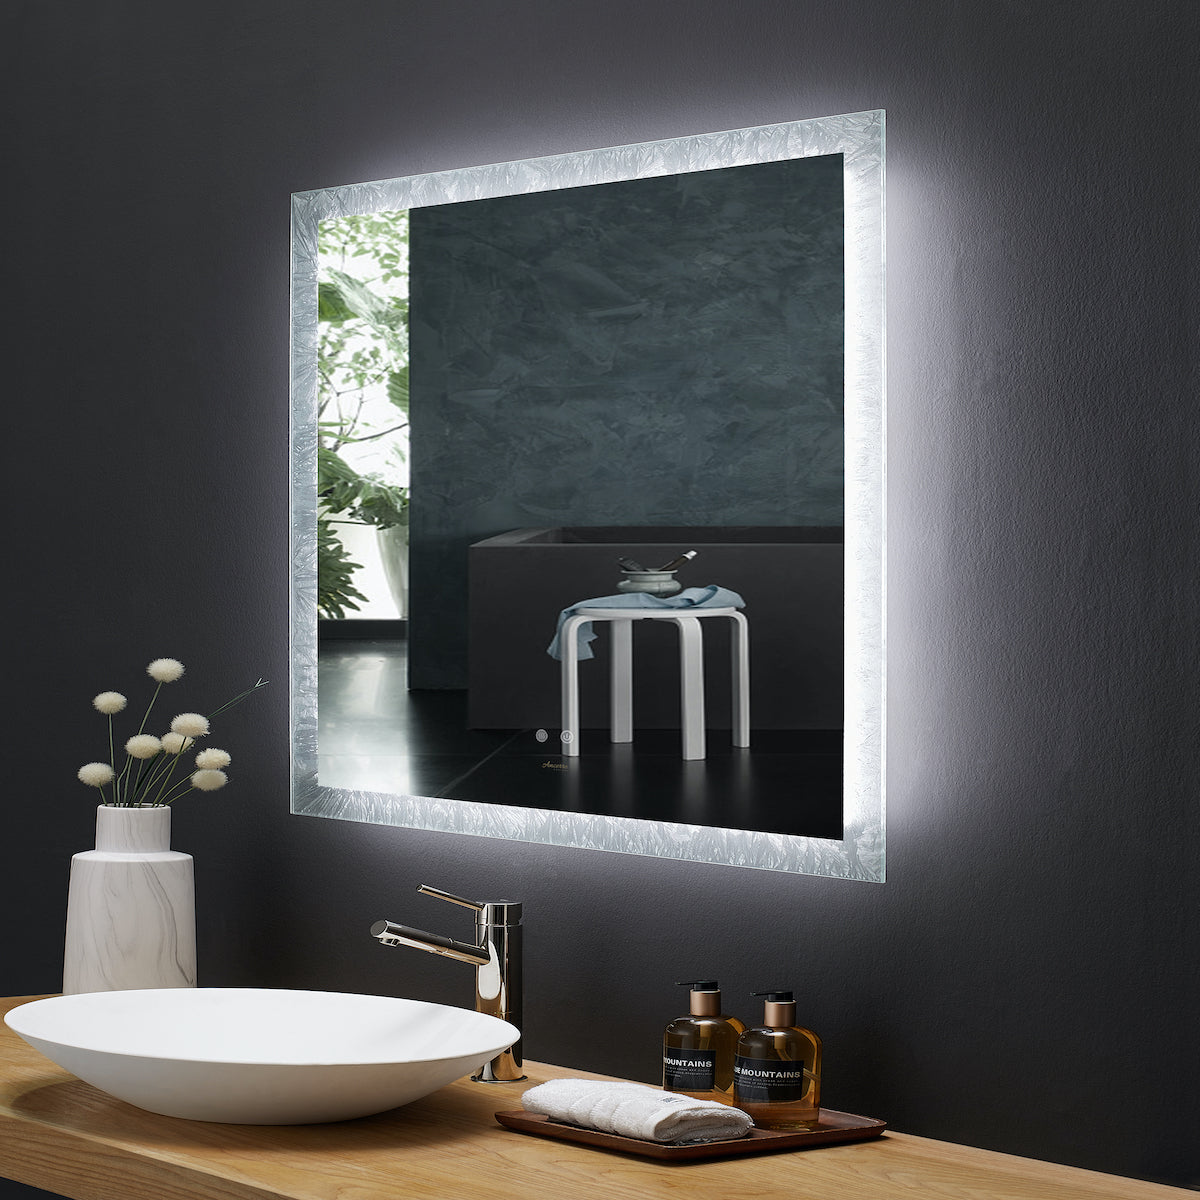 Ancerre Designs 36" LED Frysta Mirror LEDM-FRYSTA-36 Angle